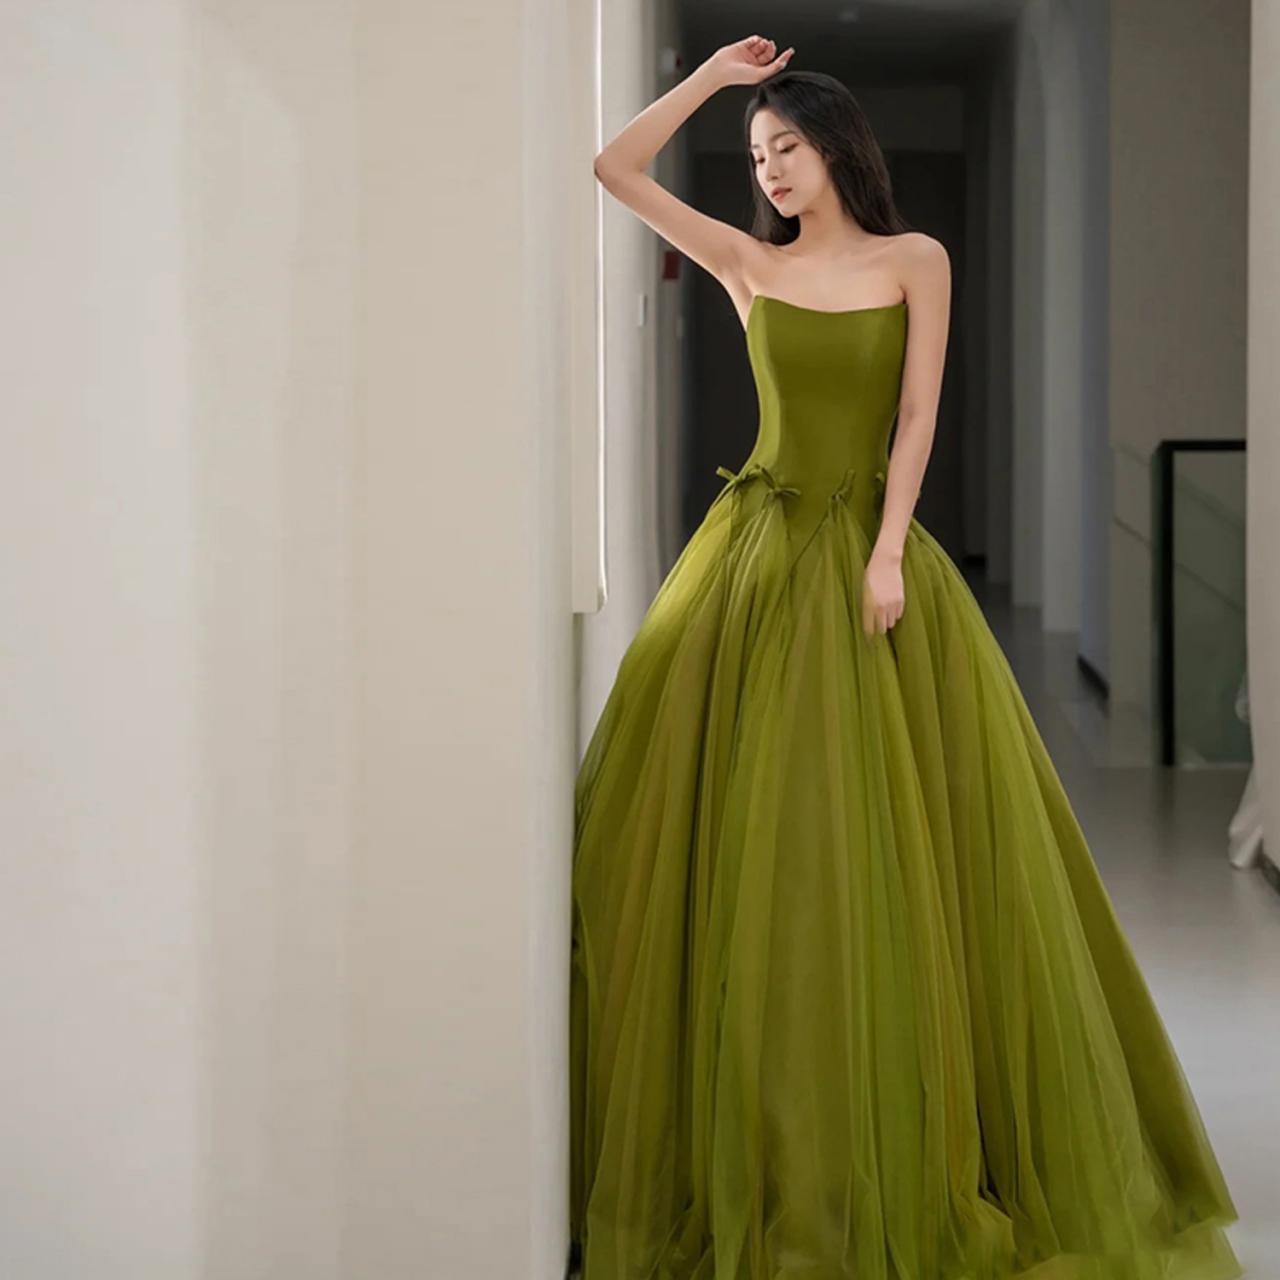 Green Tulle Prom Dresses A Line Strapless Elegant Simple Prom Gown Abendkleider Vestidos De Cocktail